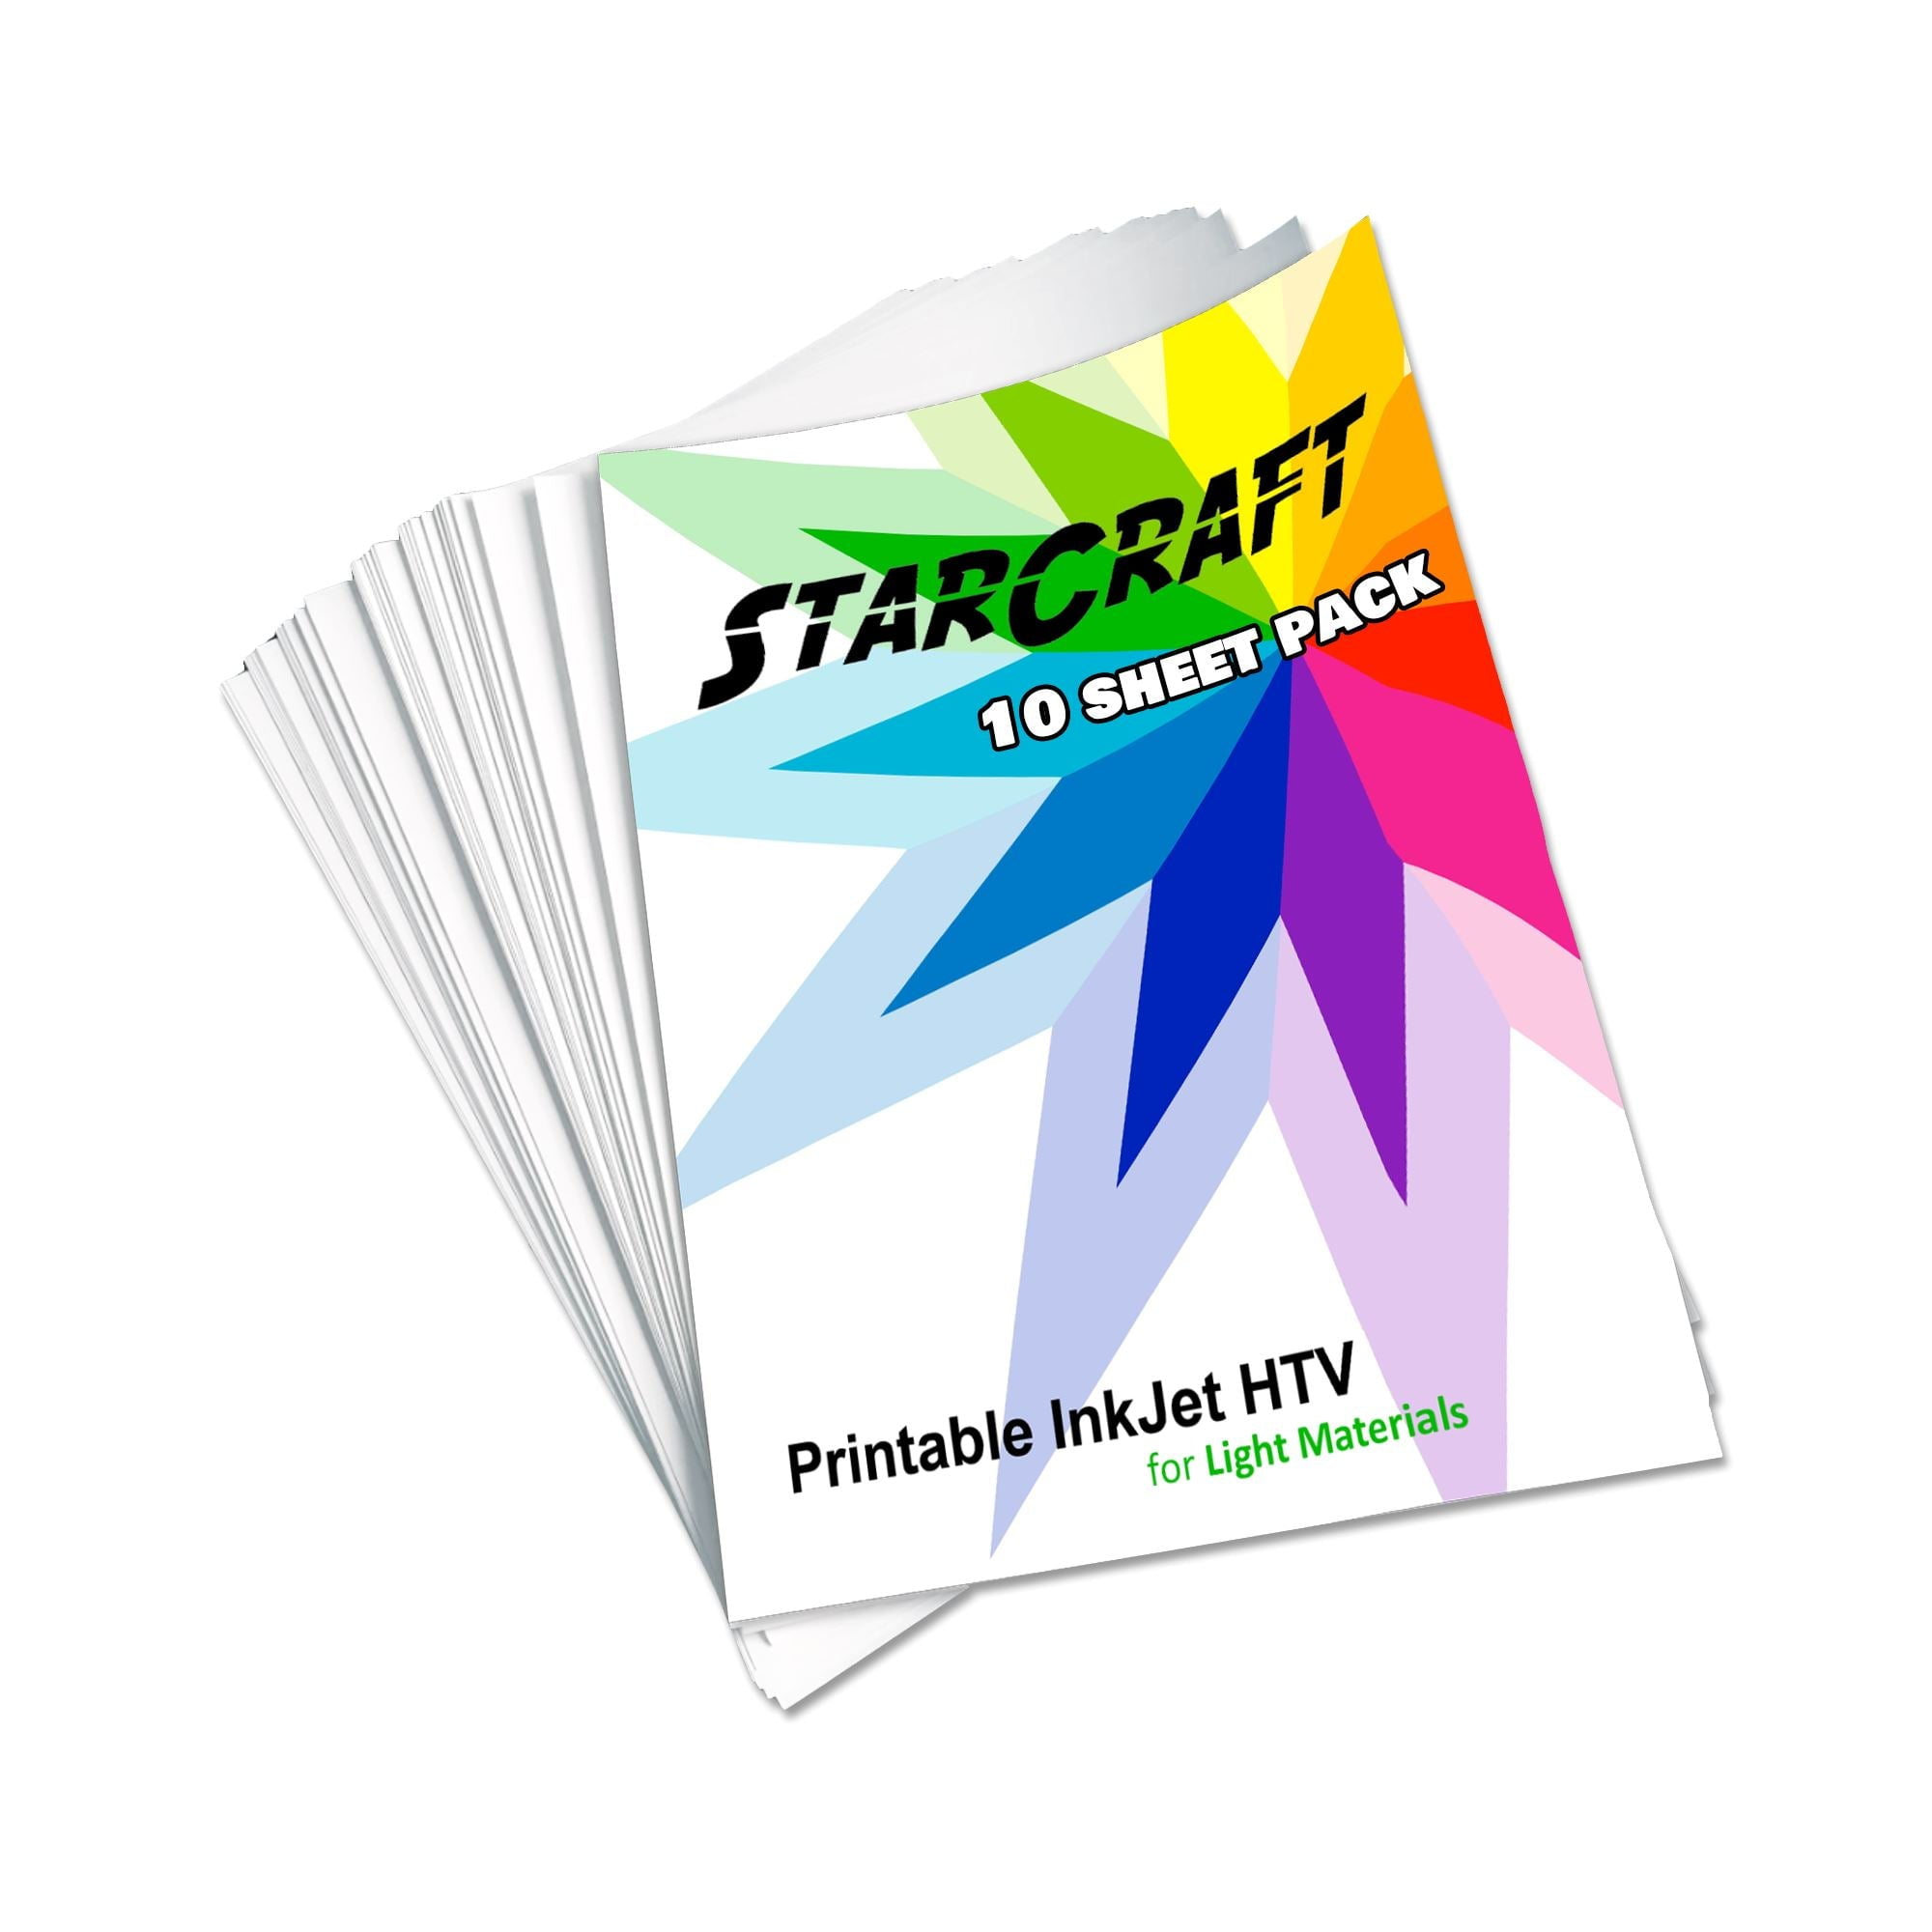  Customer reviews: StarCraft Inkjet Printable Heat Transfer  (HTV) 10 Sheet Pack - Light Materials